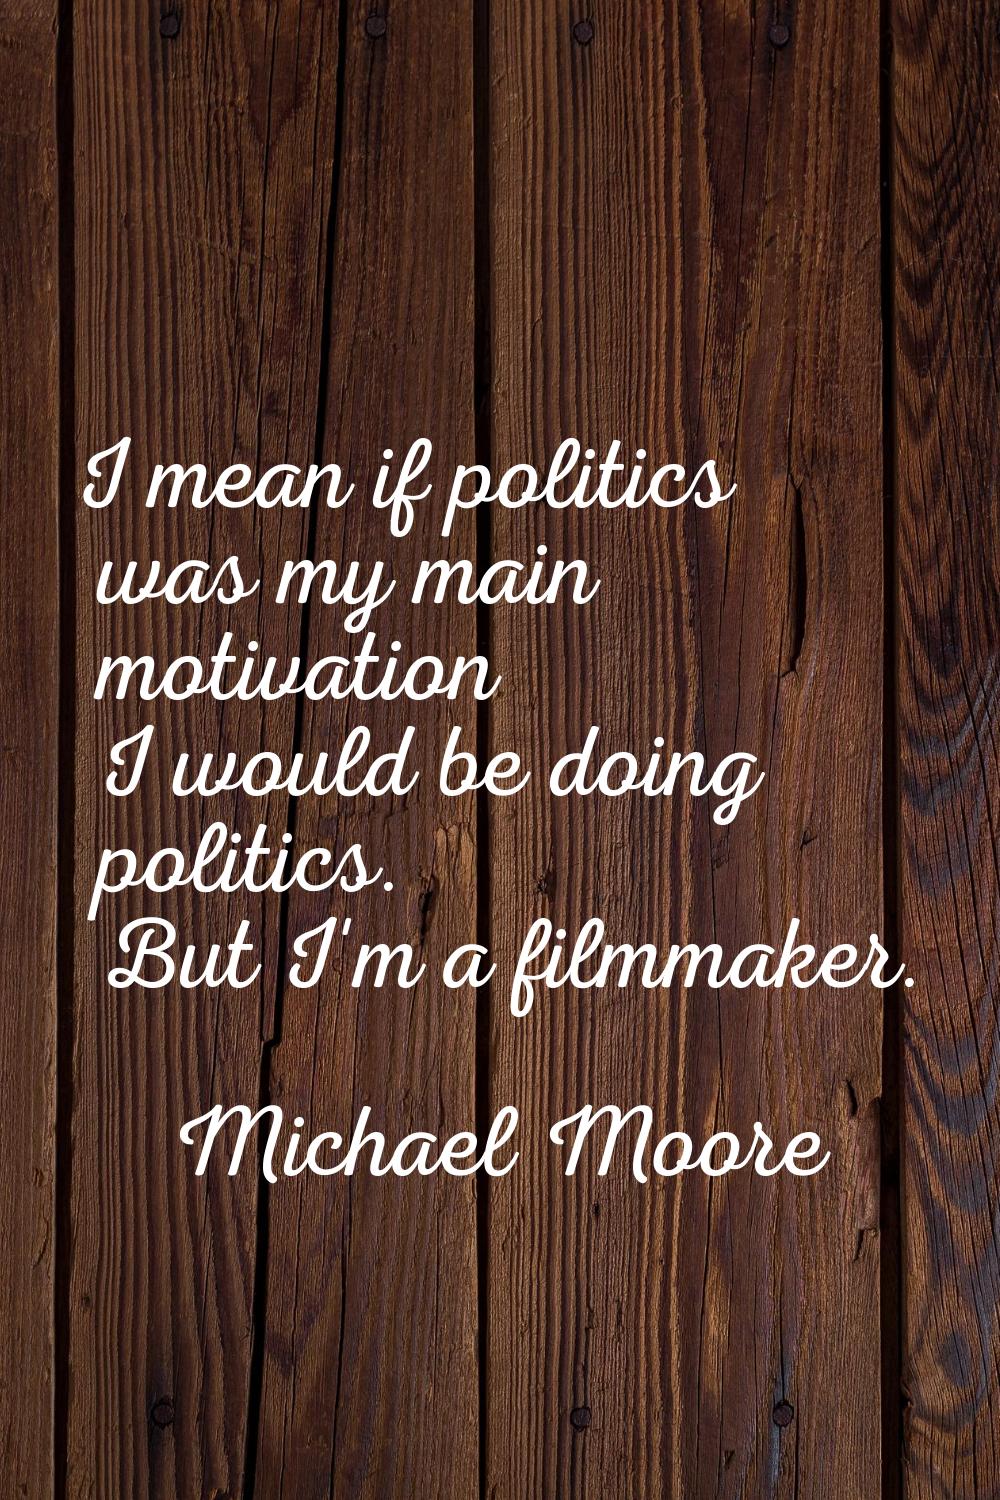 I mean if politics was my main motivation I would be doing politics. But I'm a filmmaker.